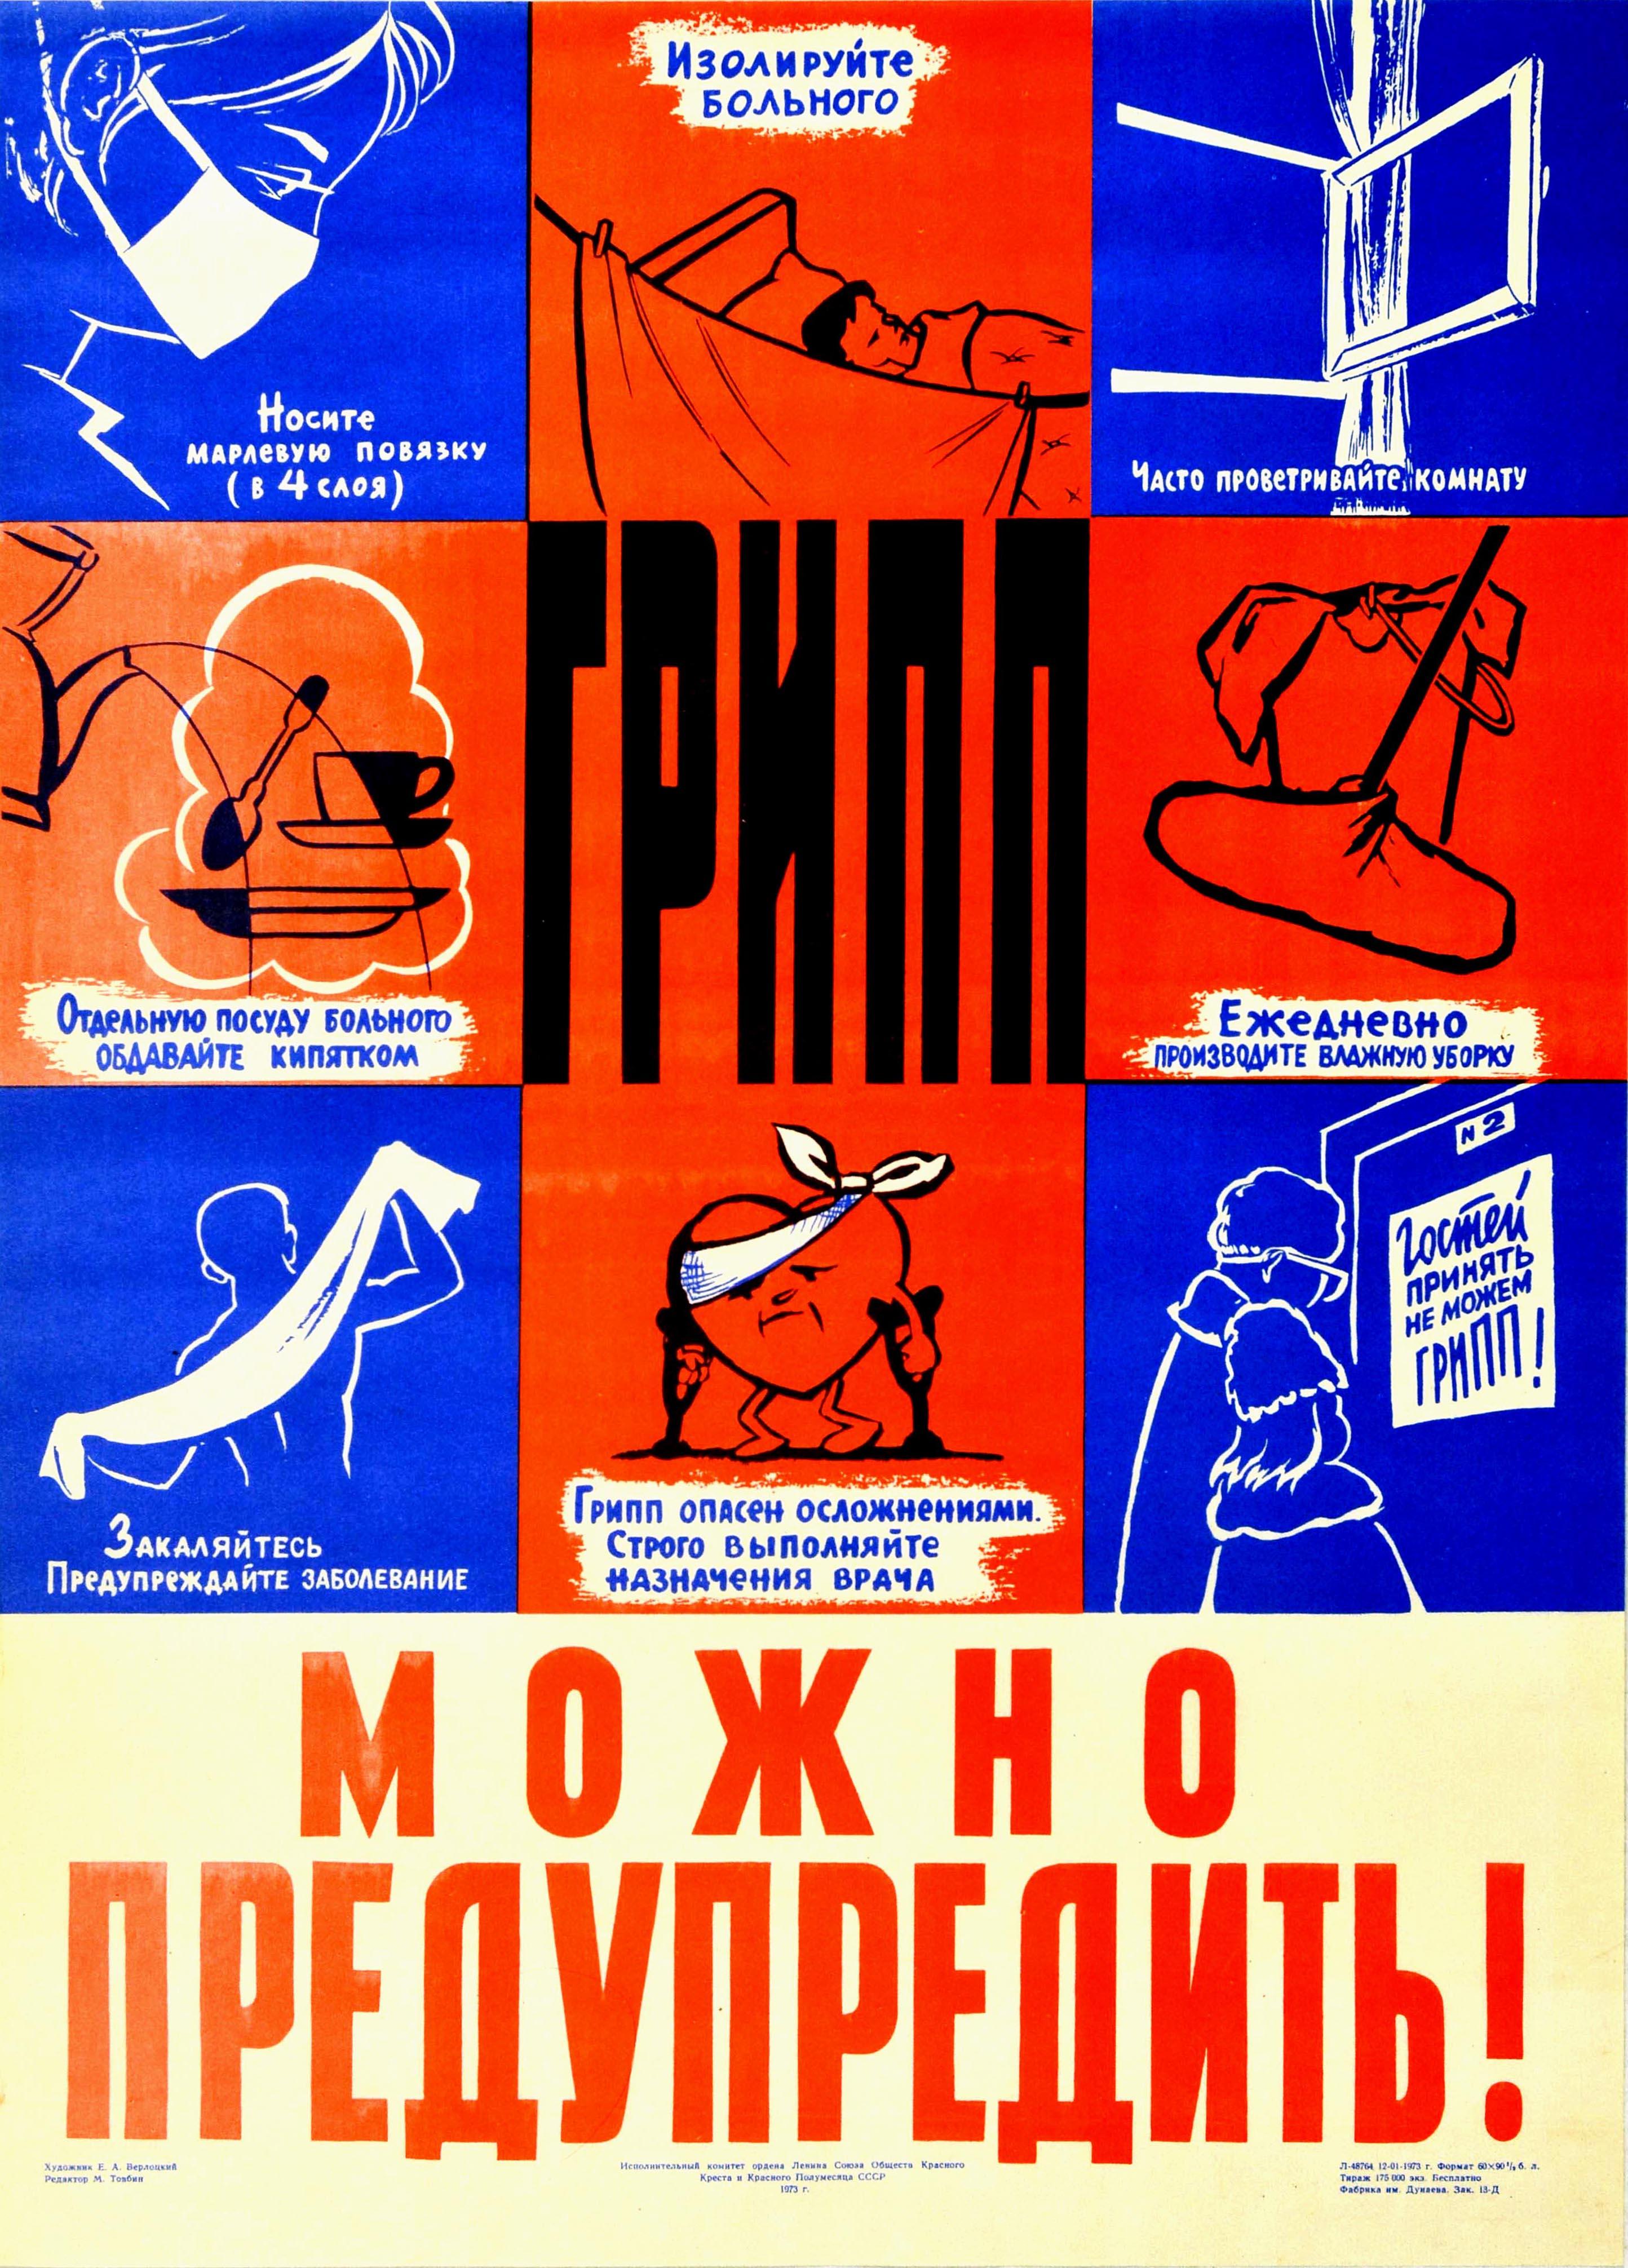 E.A. Verlotski Print - Original Vintage Poster Flu Can Be Prevented Public Health Mask Hygiene Distance